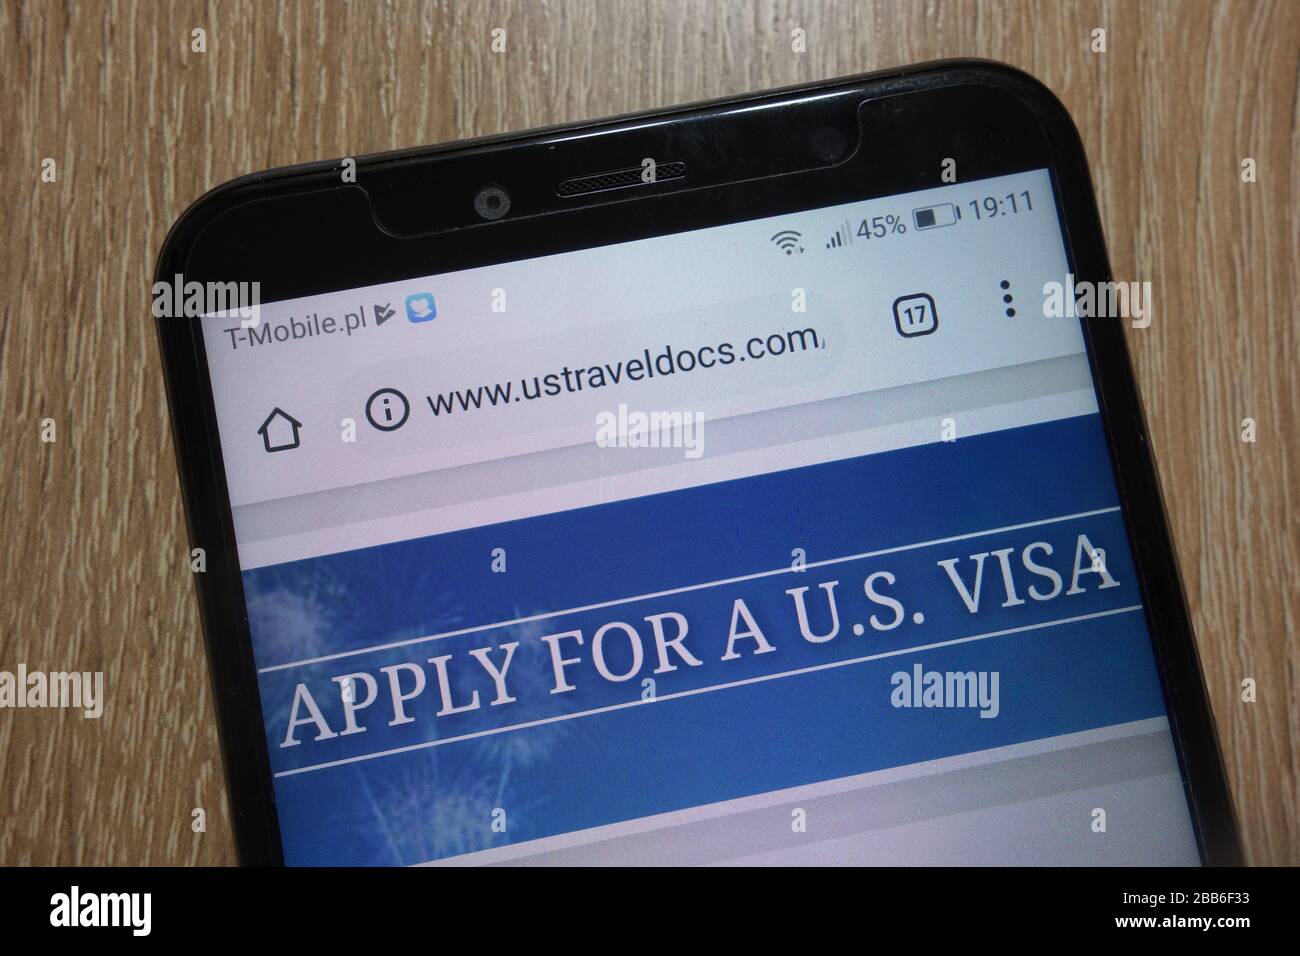 ustraveldocs.com website about apply for U.S. visa displayed on smartphone Stock Photo